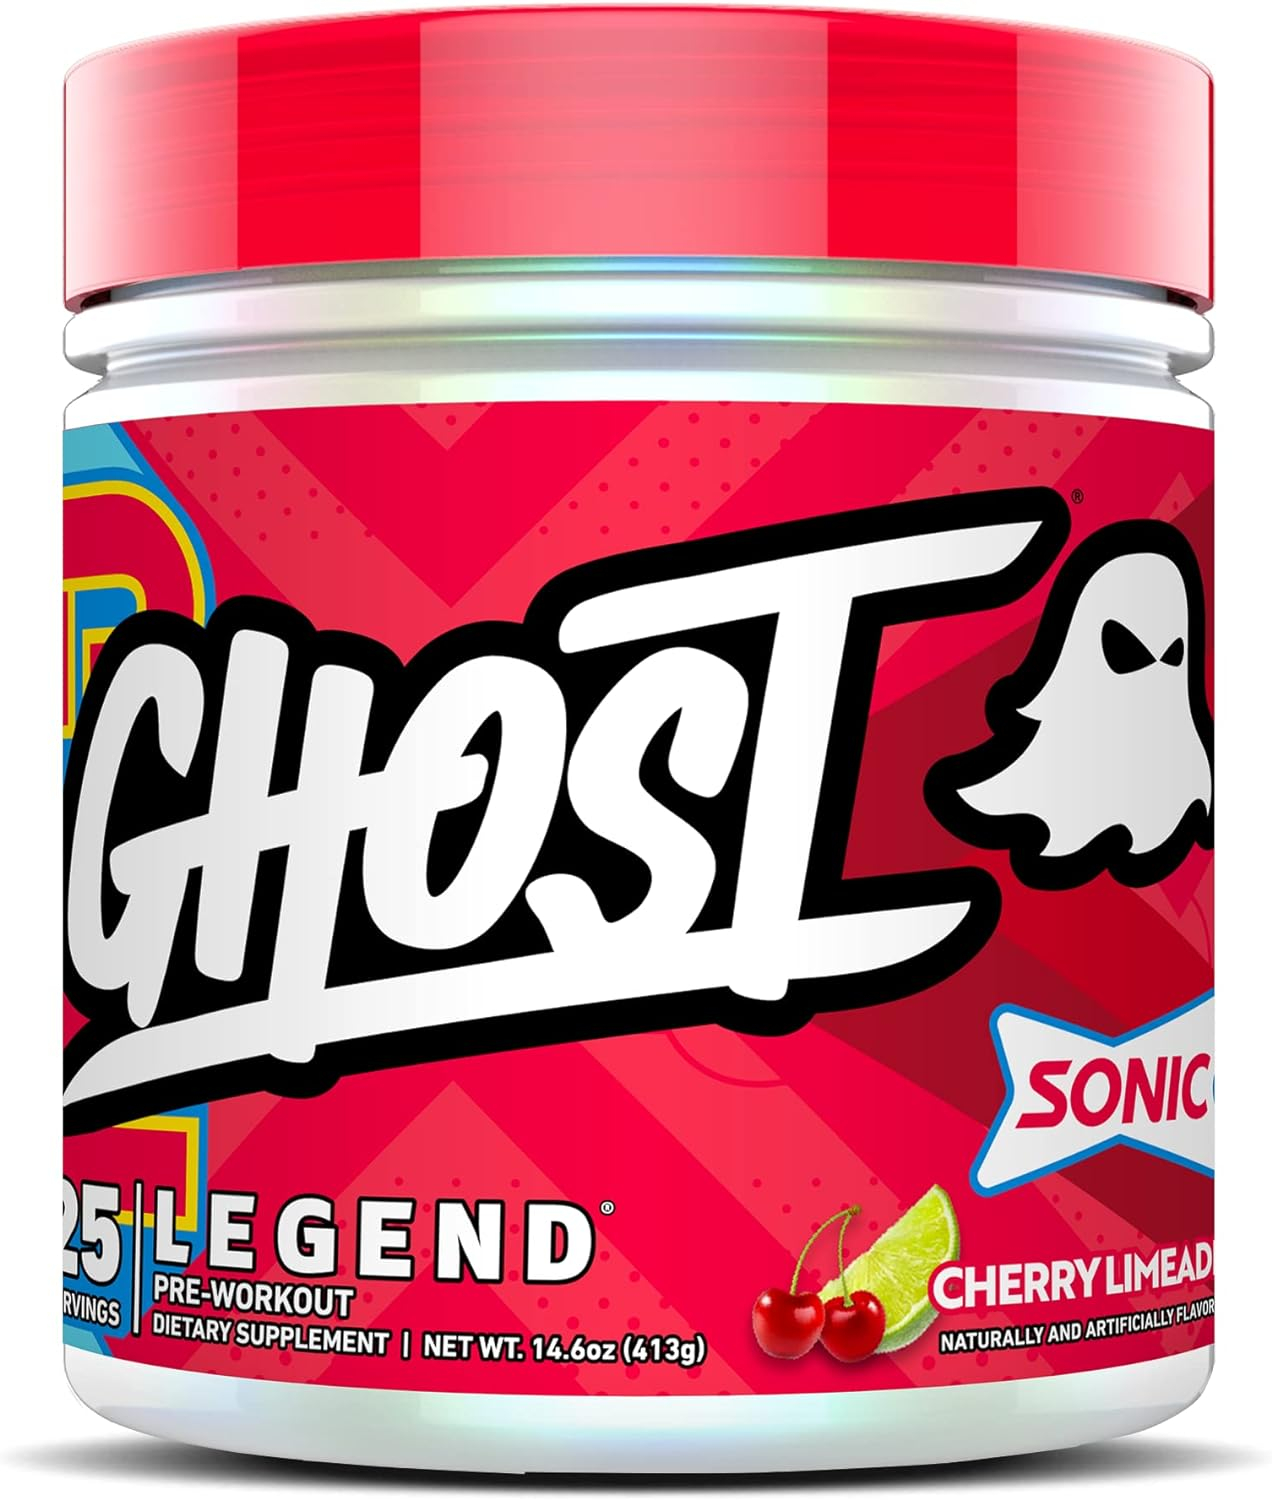 GHOST Legend V2 Pre-Workout Energy Powder, Sonic Cherry Limeade - 25 Servings - Caffeine, L-Citrulline,  Beta Alanine Blend for Energy Focus  Pumps - Free of Soy, Sugar  Gluten, Vegan